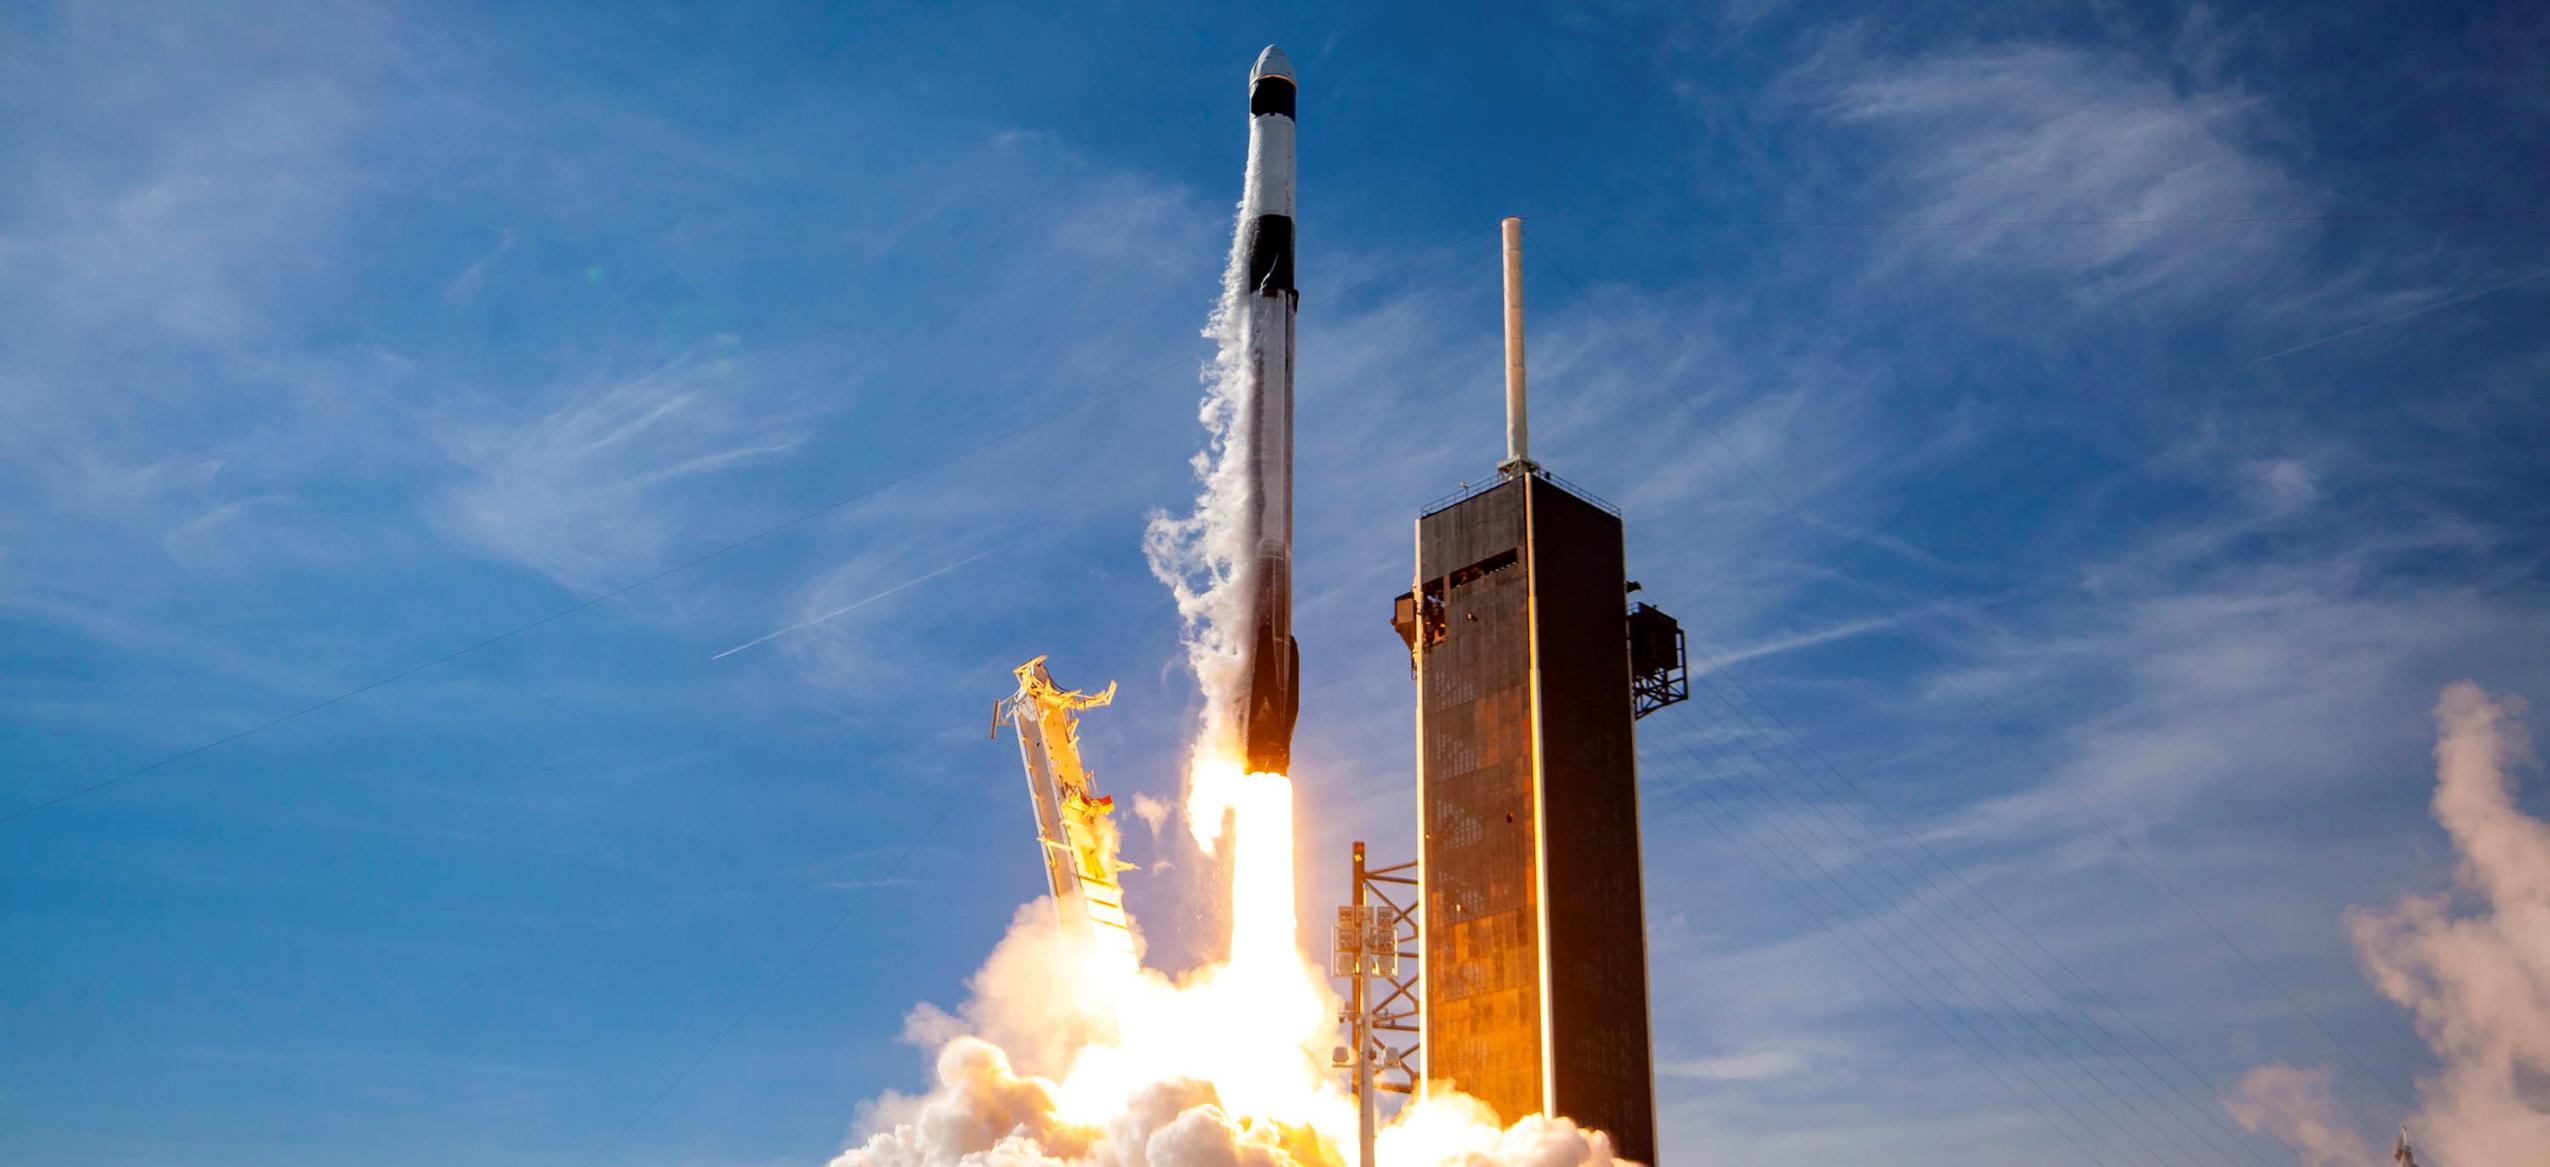 CRS-21 Cargo Dragon 2 Falcon 9 B1058 120620 launch (SpaceX) 2 crop (c)